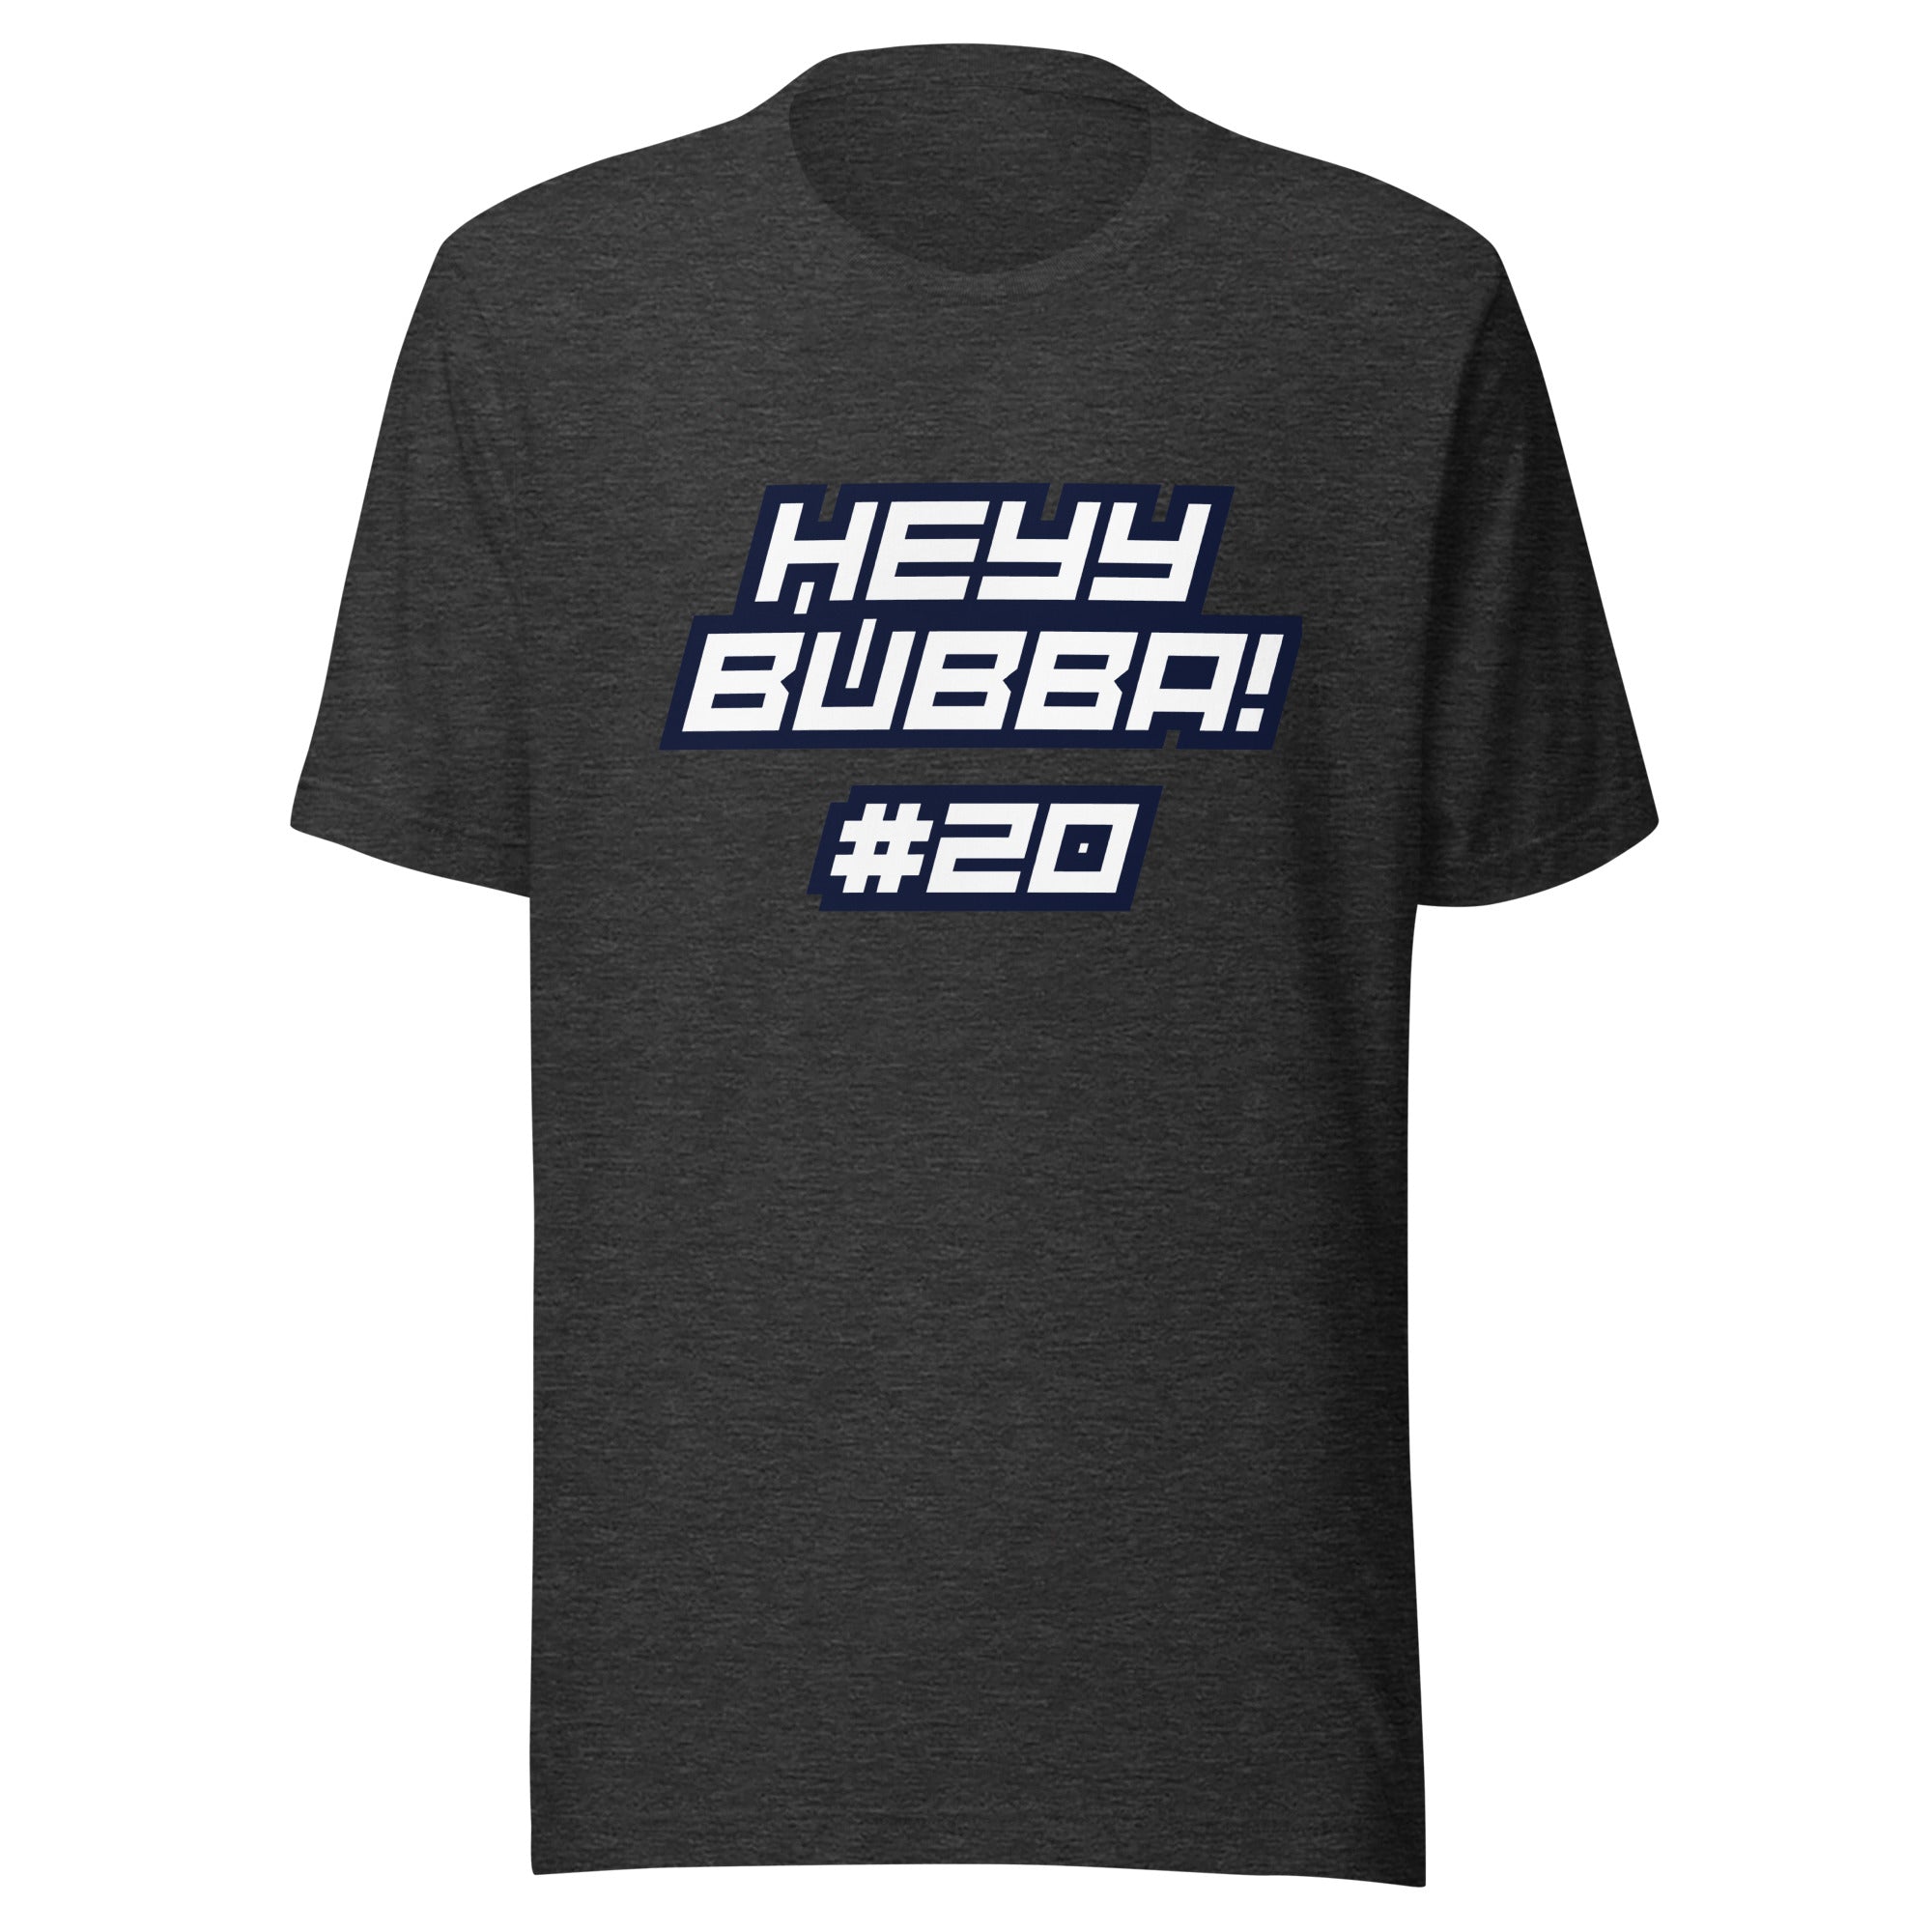 HEYY BUBBA - Unisex t-shirt